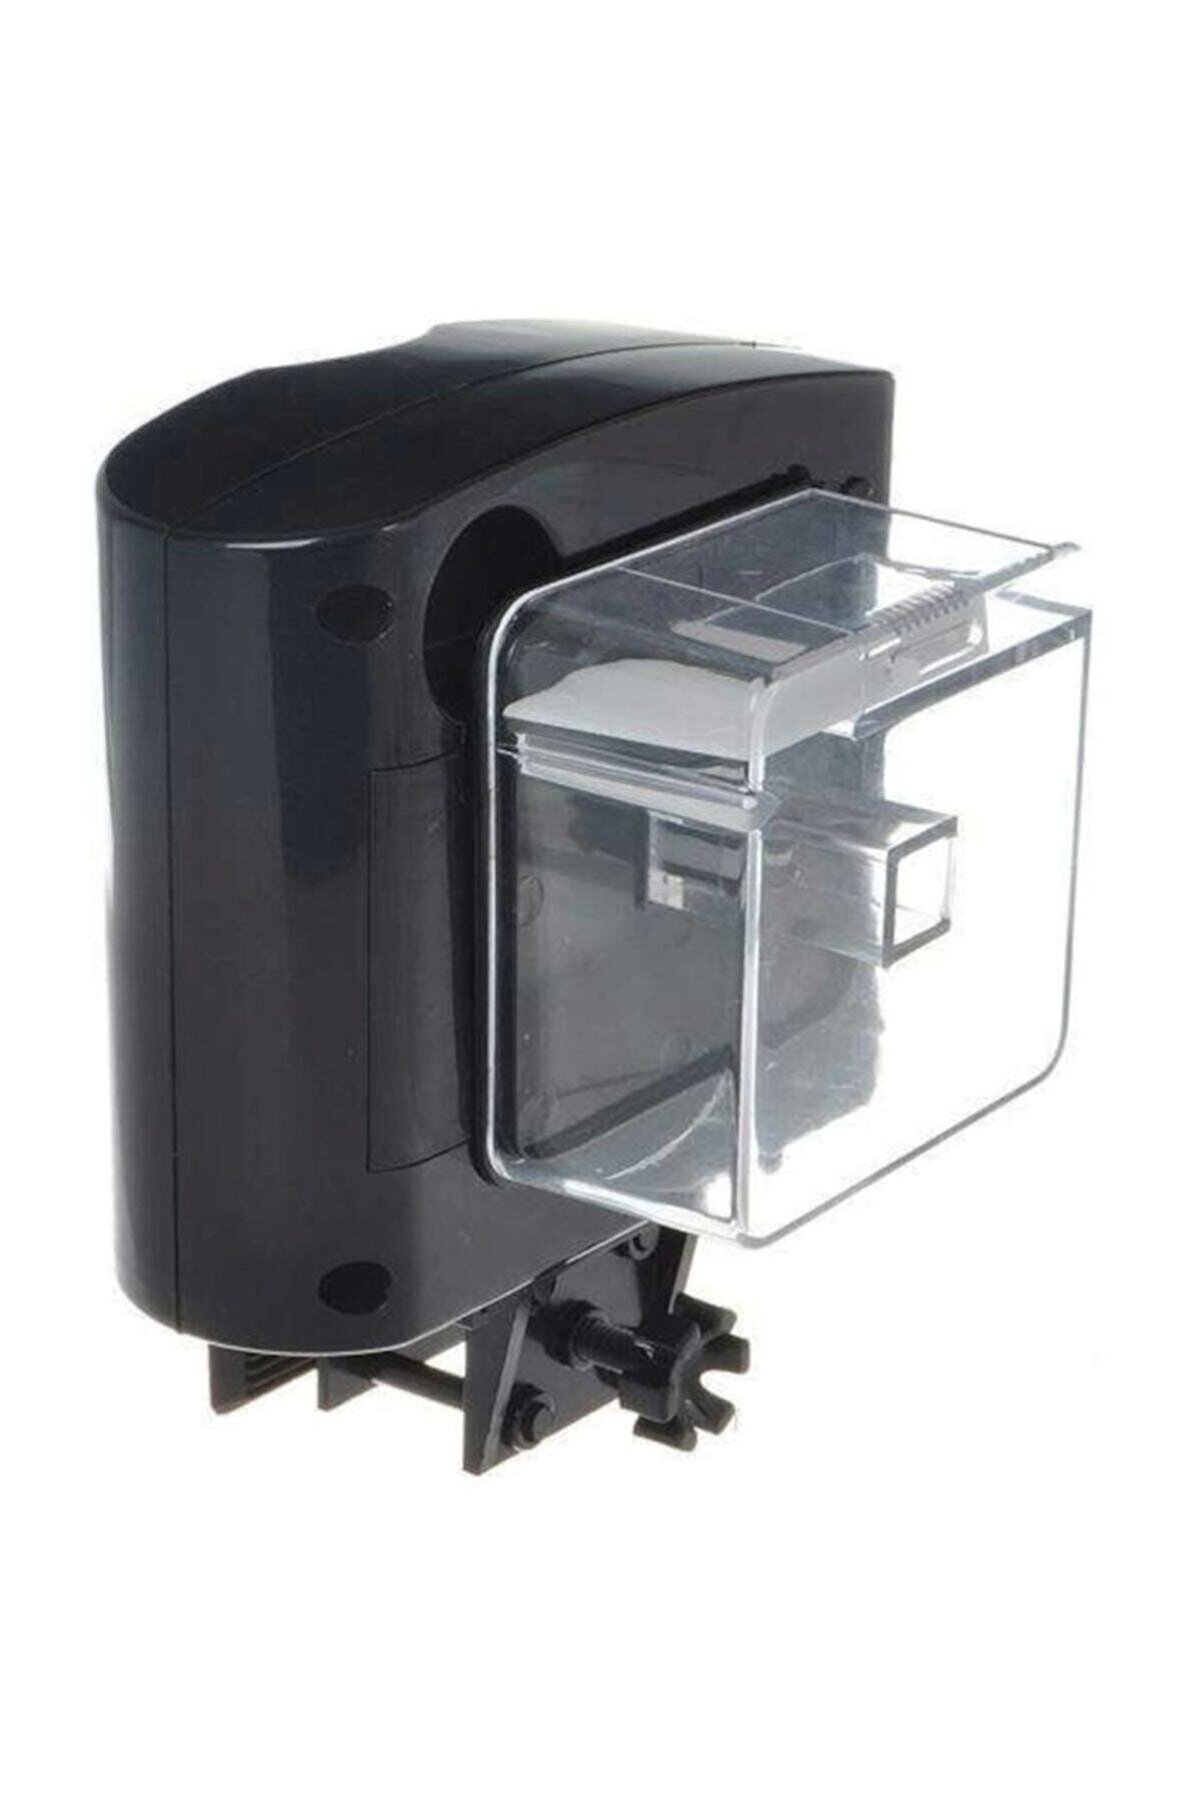 Warm Tone Warmtone Wt-180a Otomatik Akvaryum Balığı Yemleme Makinası